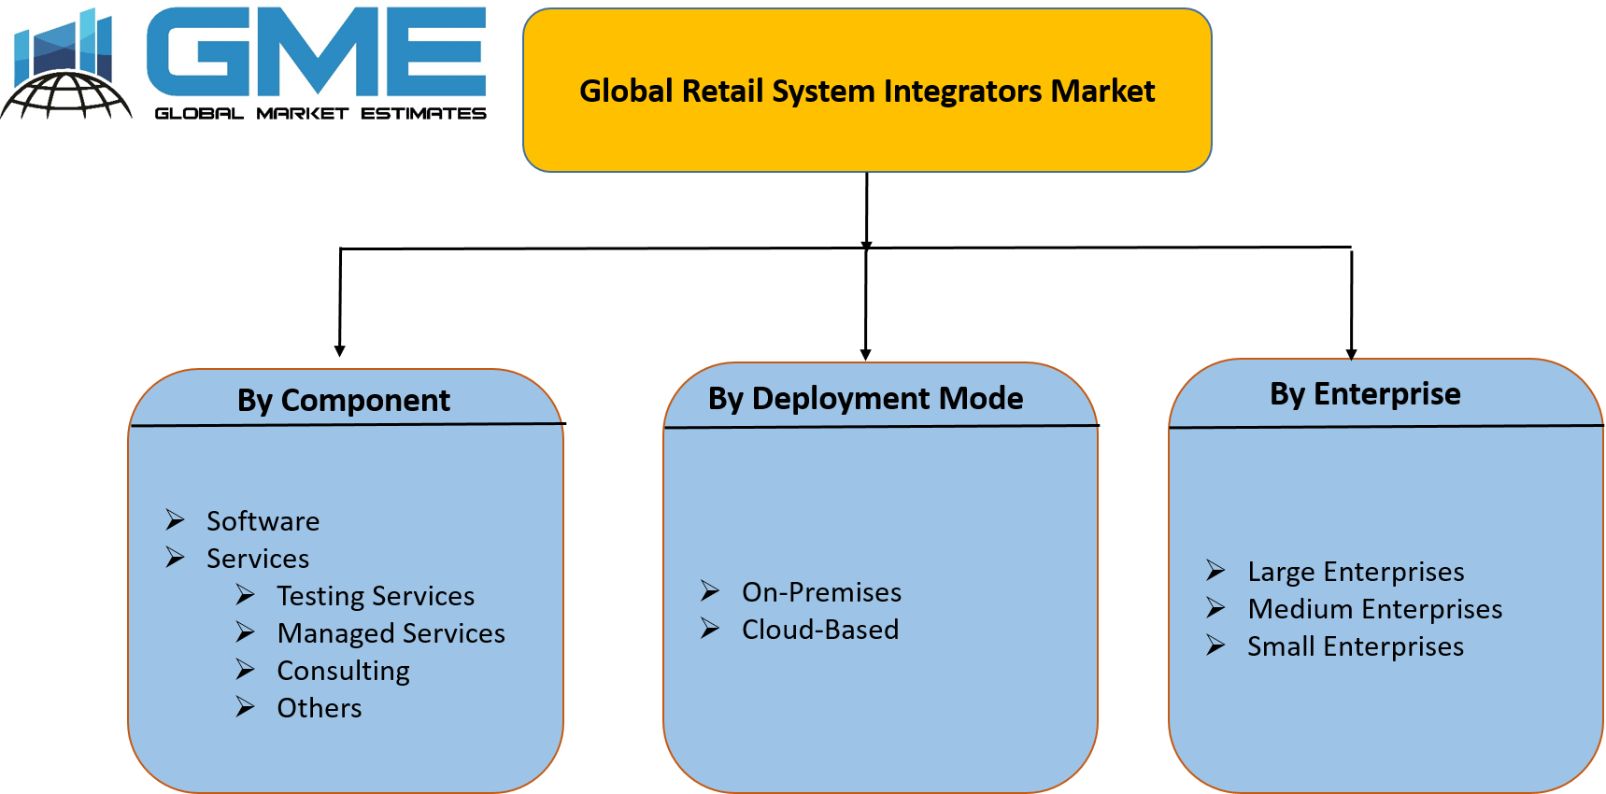 Global Retail System Integrators Market Segmentation